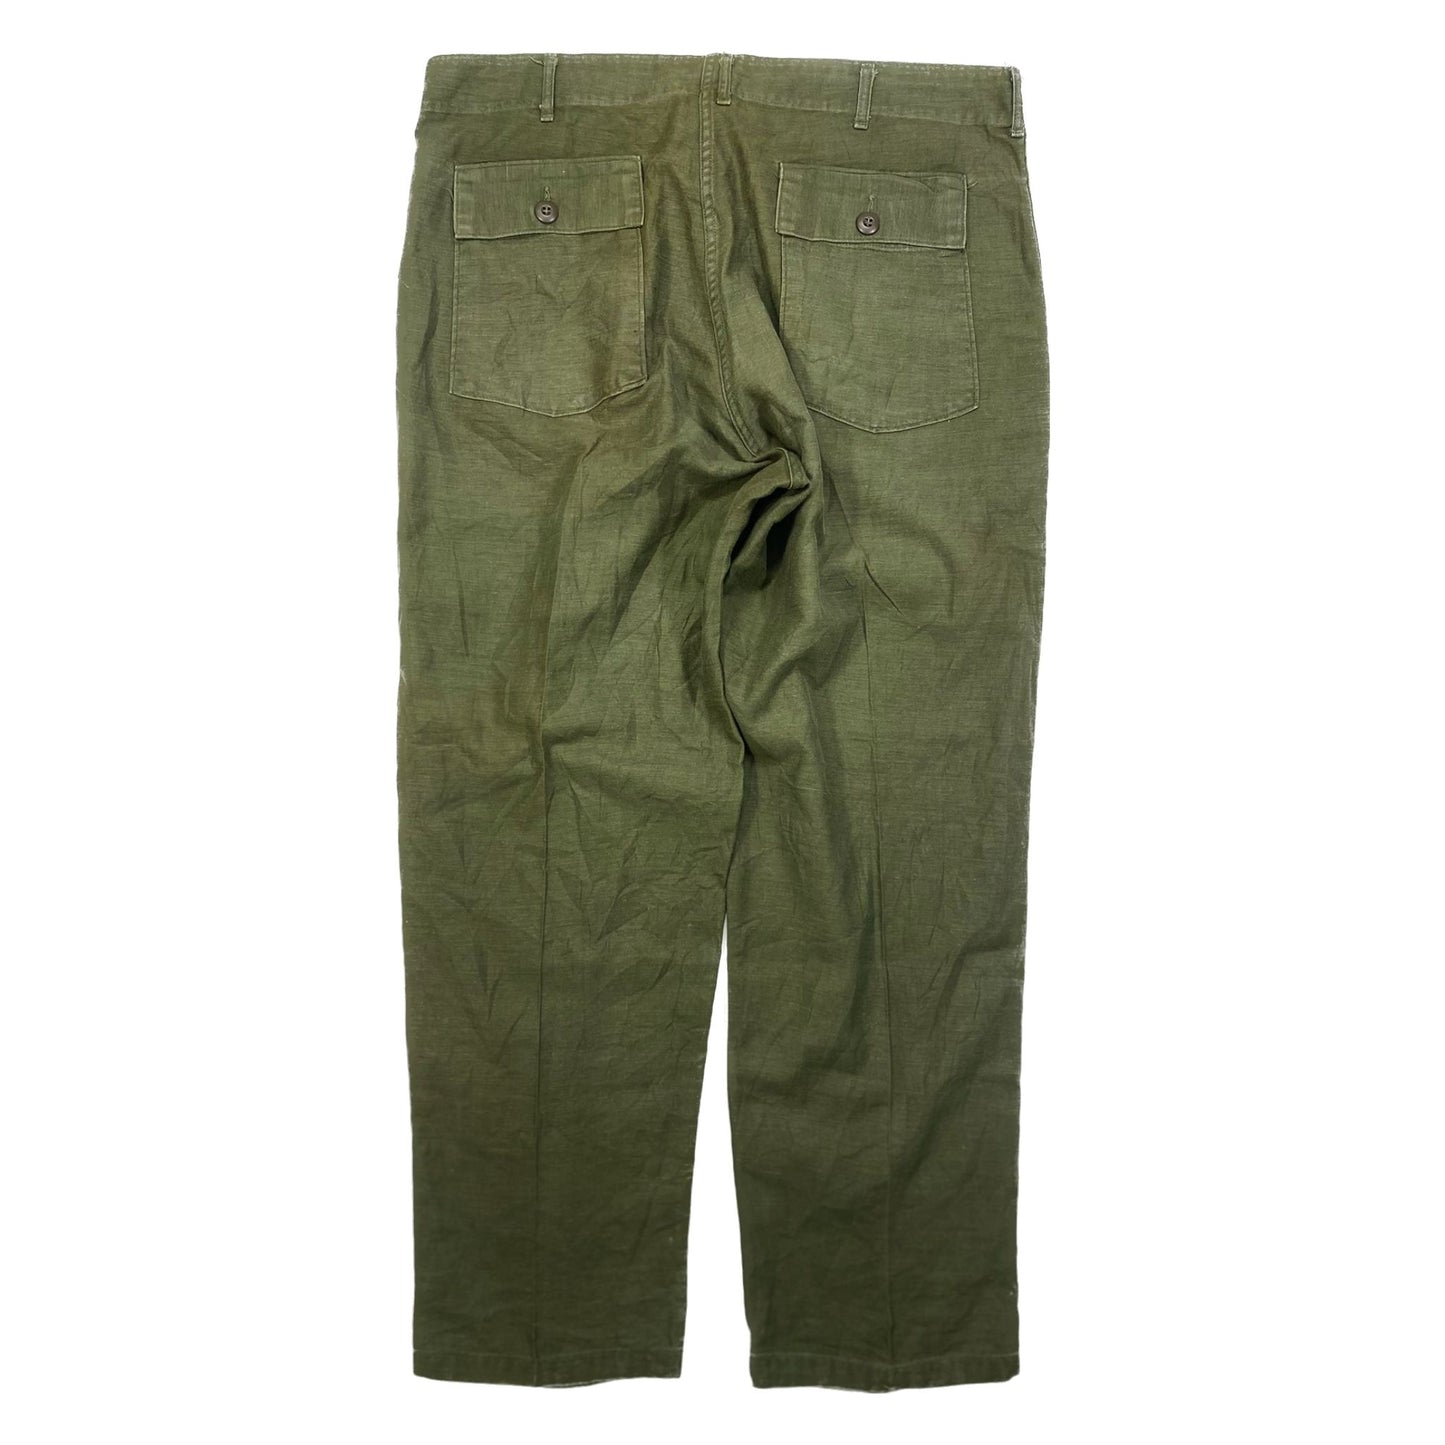 US OG-107 Fatique Utility Pants, Sateen, Baker pants - size 40 x 31